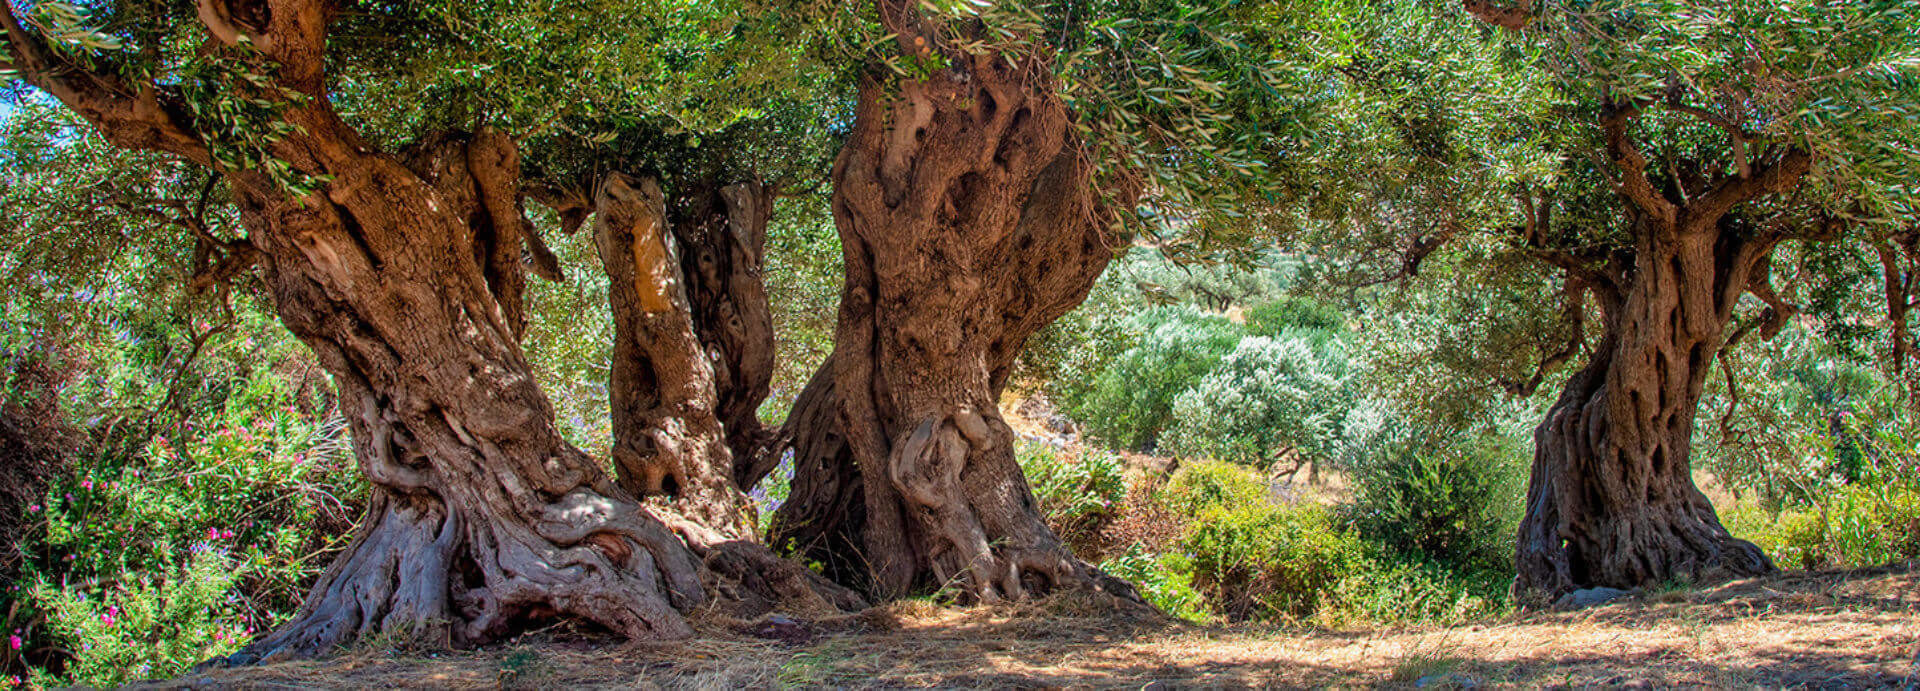 Century olive trees zakros politeia resized